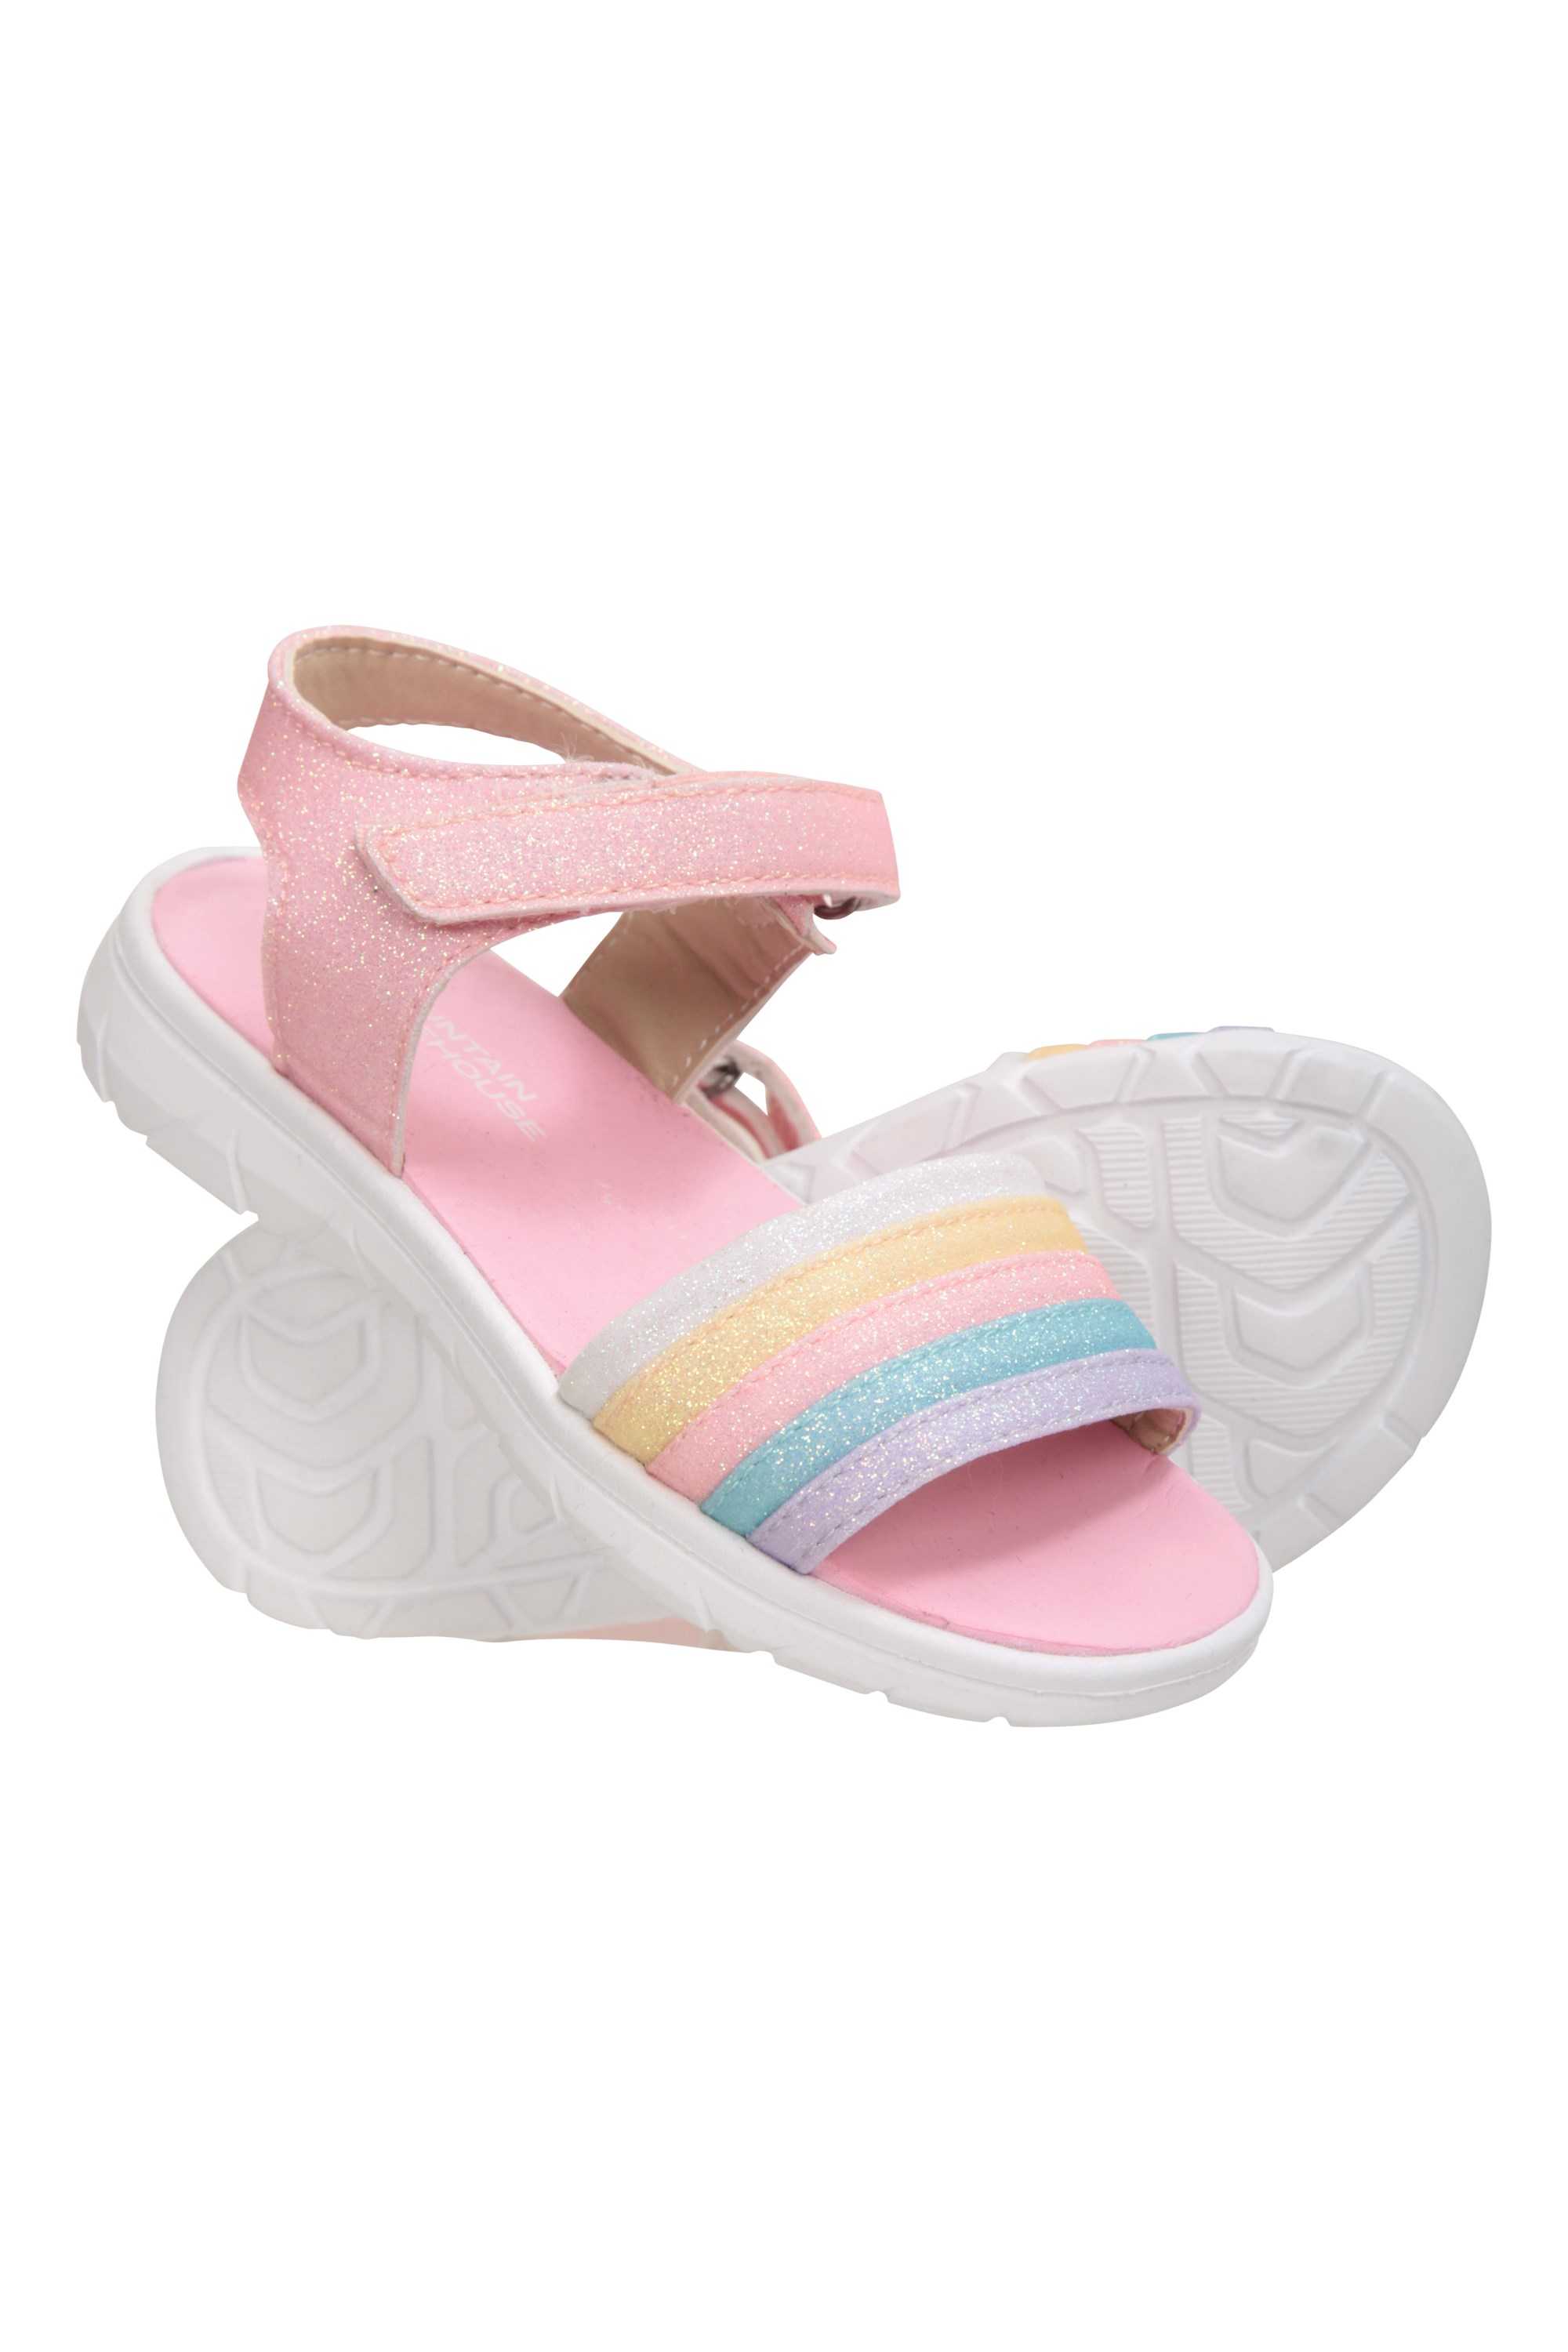 Buy Beige Sandals for Girls by Wotnot Online | Ajio.com